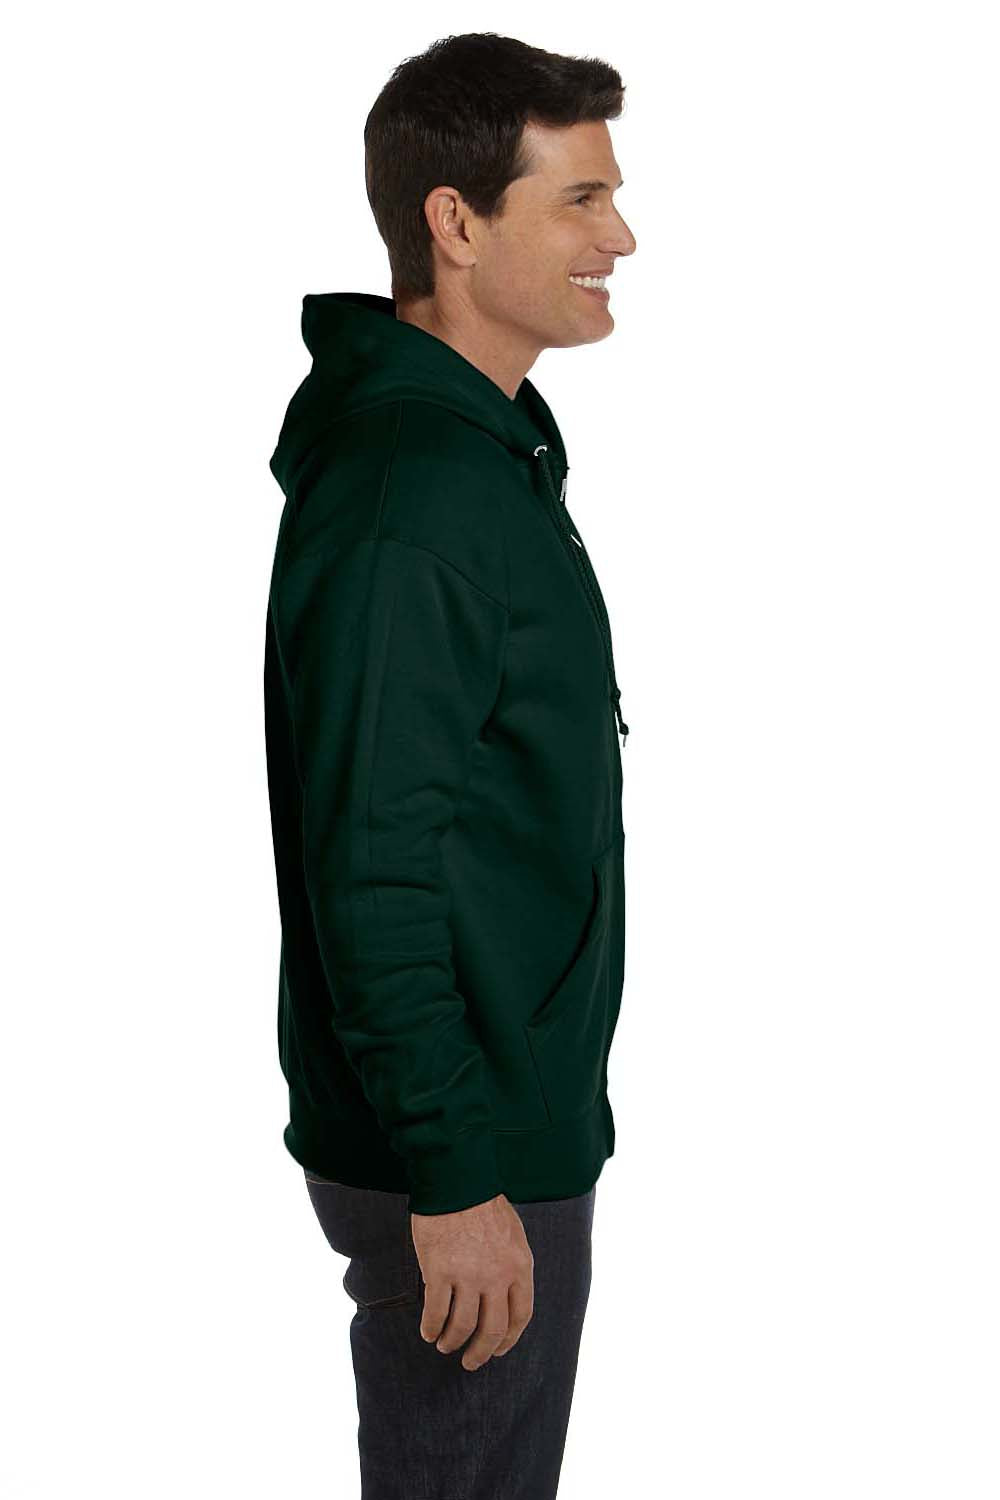 Hanes P180 Mens EcoSmart Print Pro XP Full Zip Hooded Sweatshirt Hoodie Forest Green Side